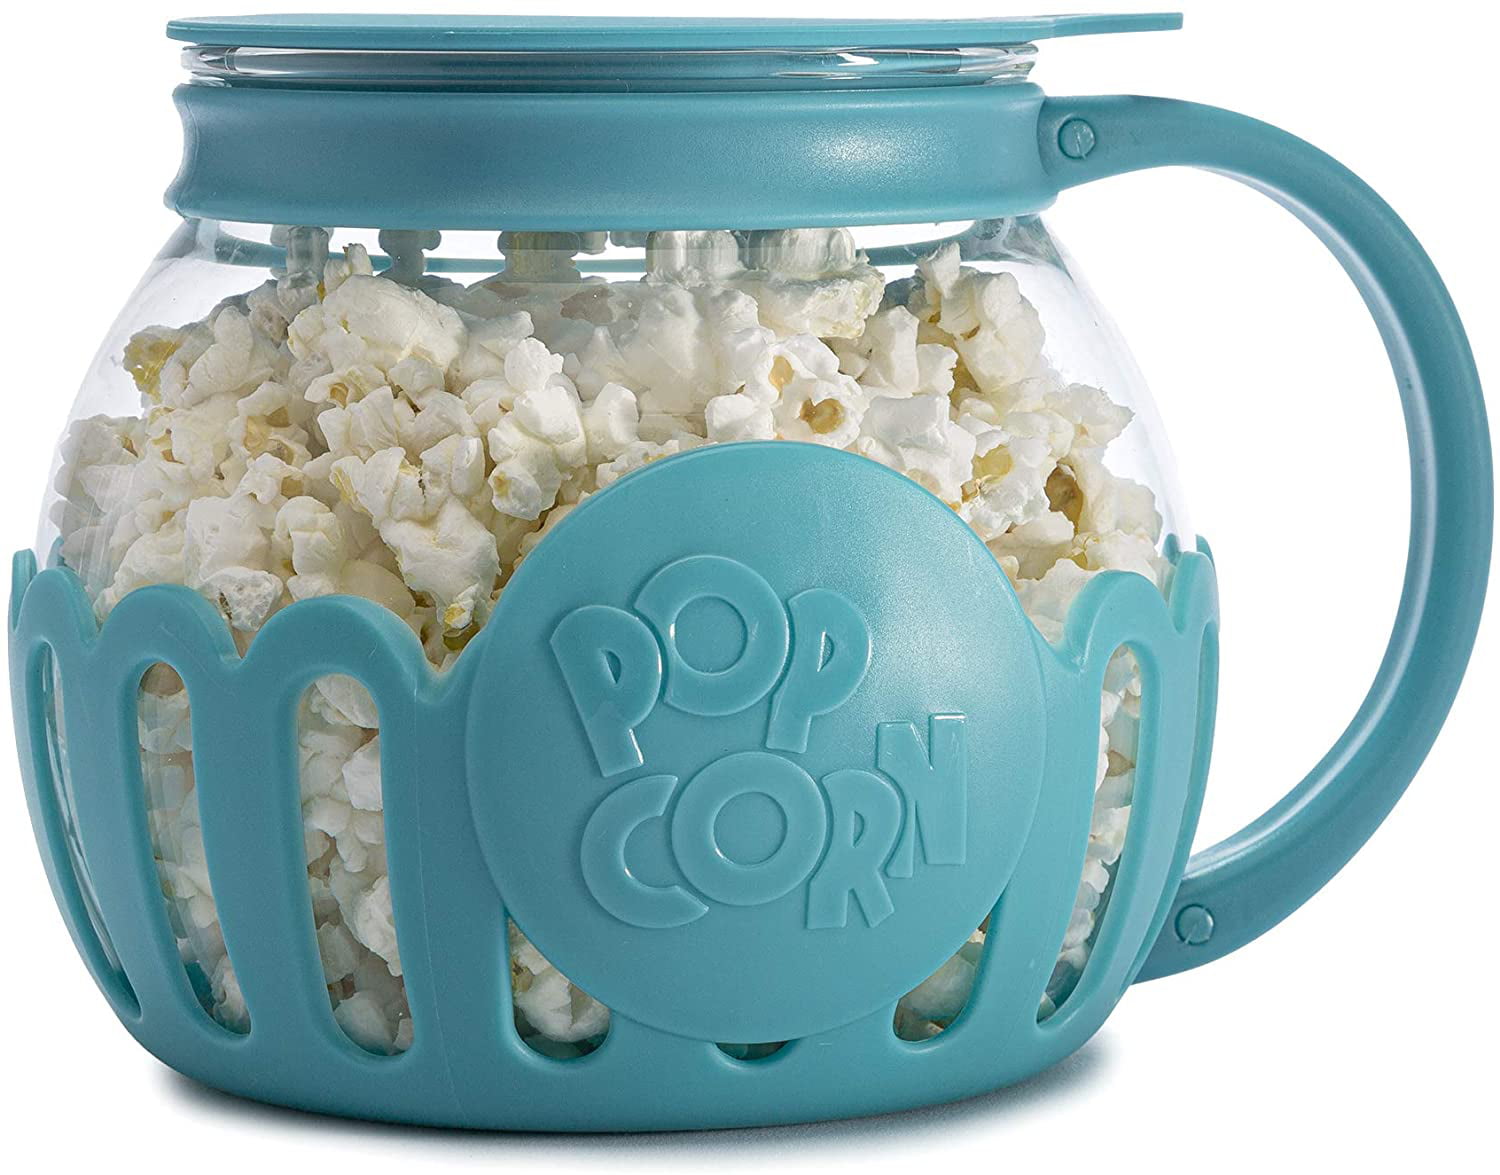 Ecolution Original Microwave MicroPop Popcorn Popper, Borosilicate